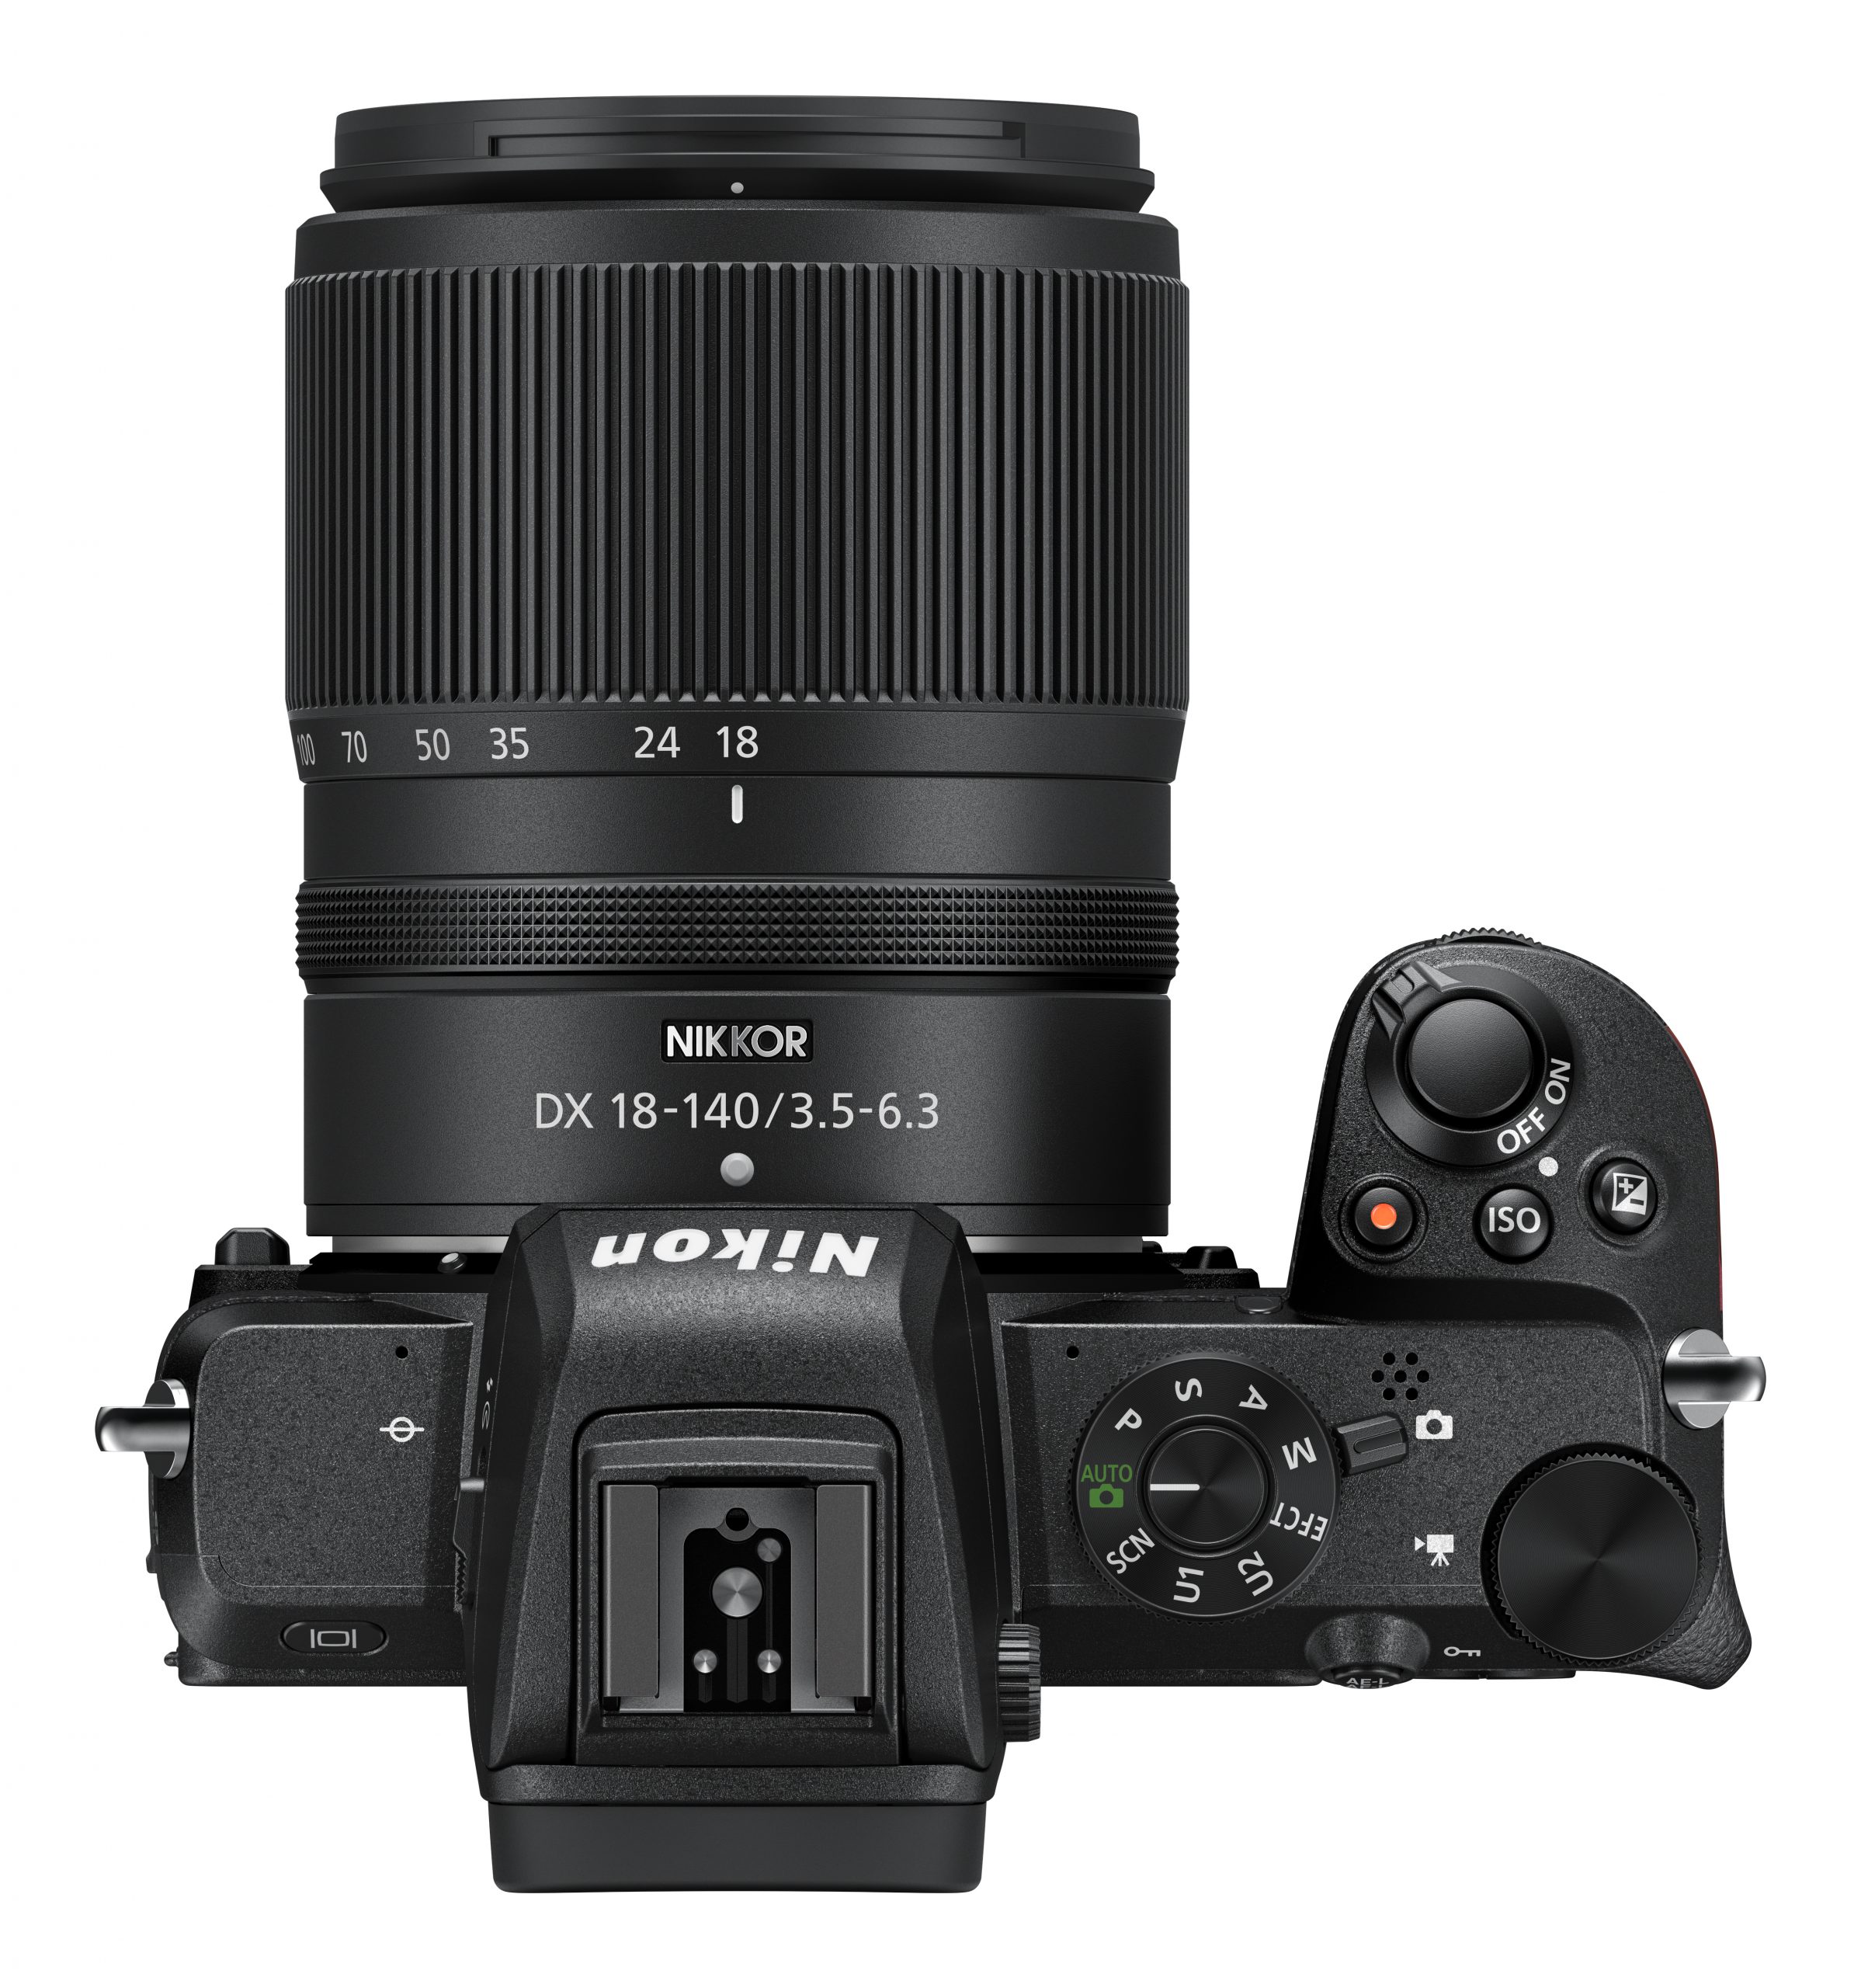 The Nikon NIKKOR Z DX Telephoto Zoom Lens on a Nikon DX camera